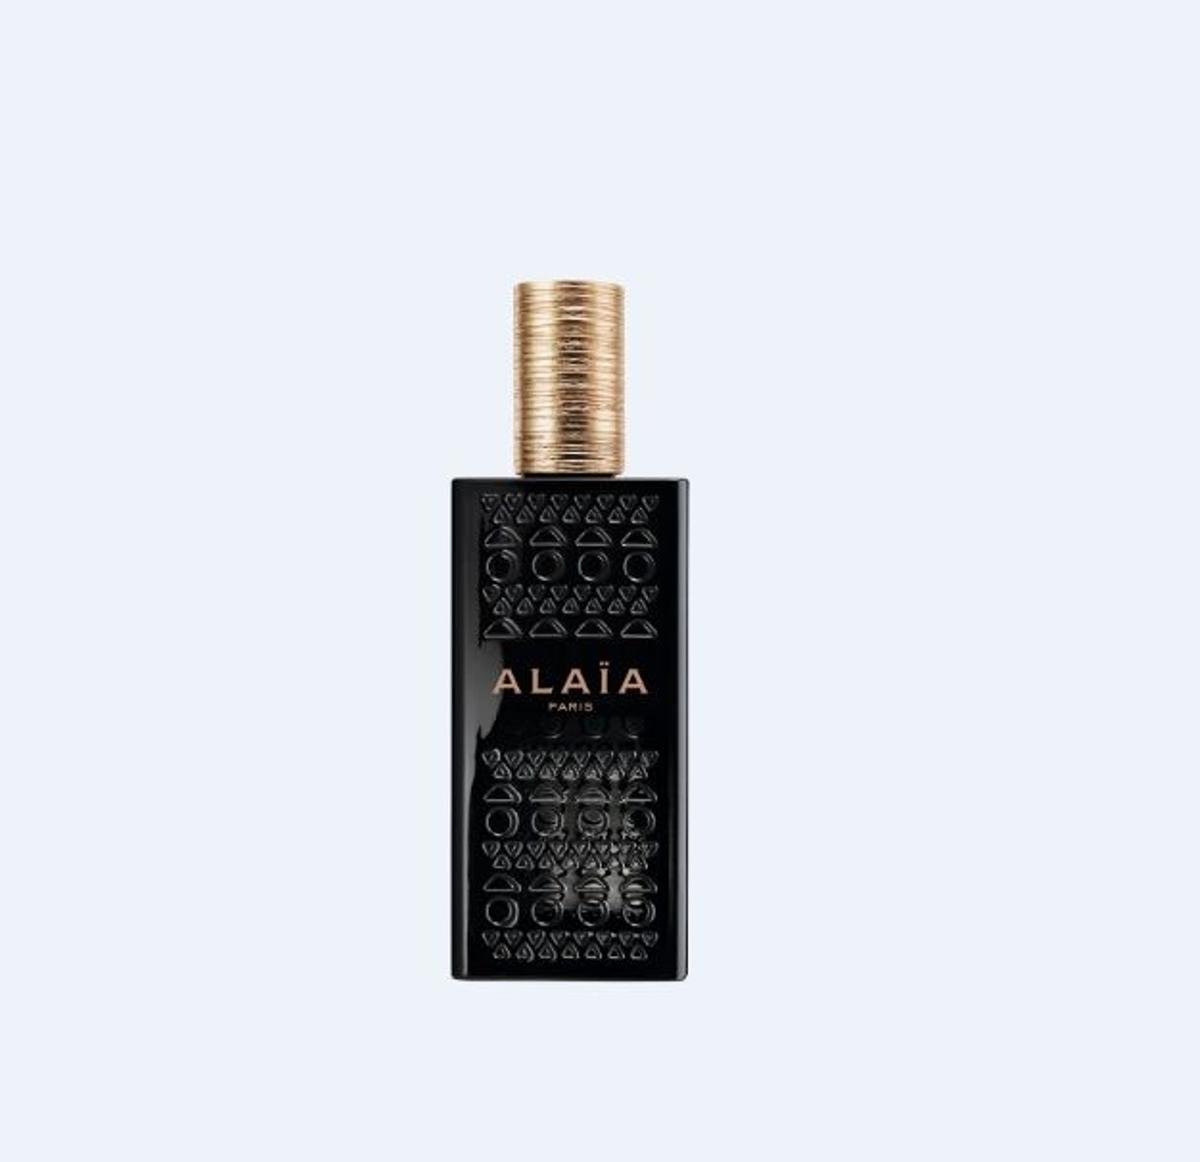 Alaïa el primer perfume de Azzedine Alaïa